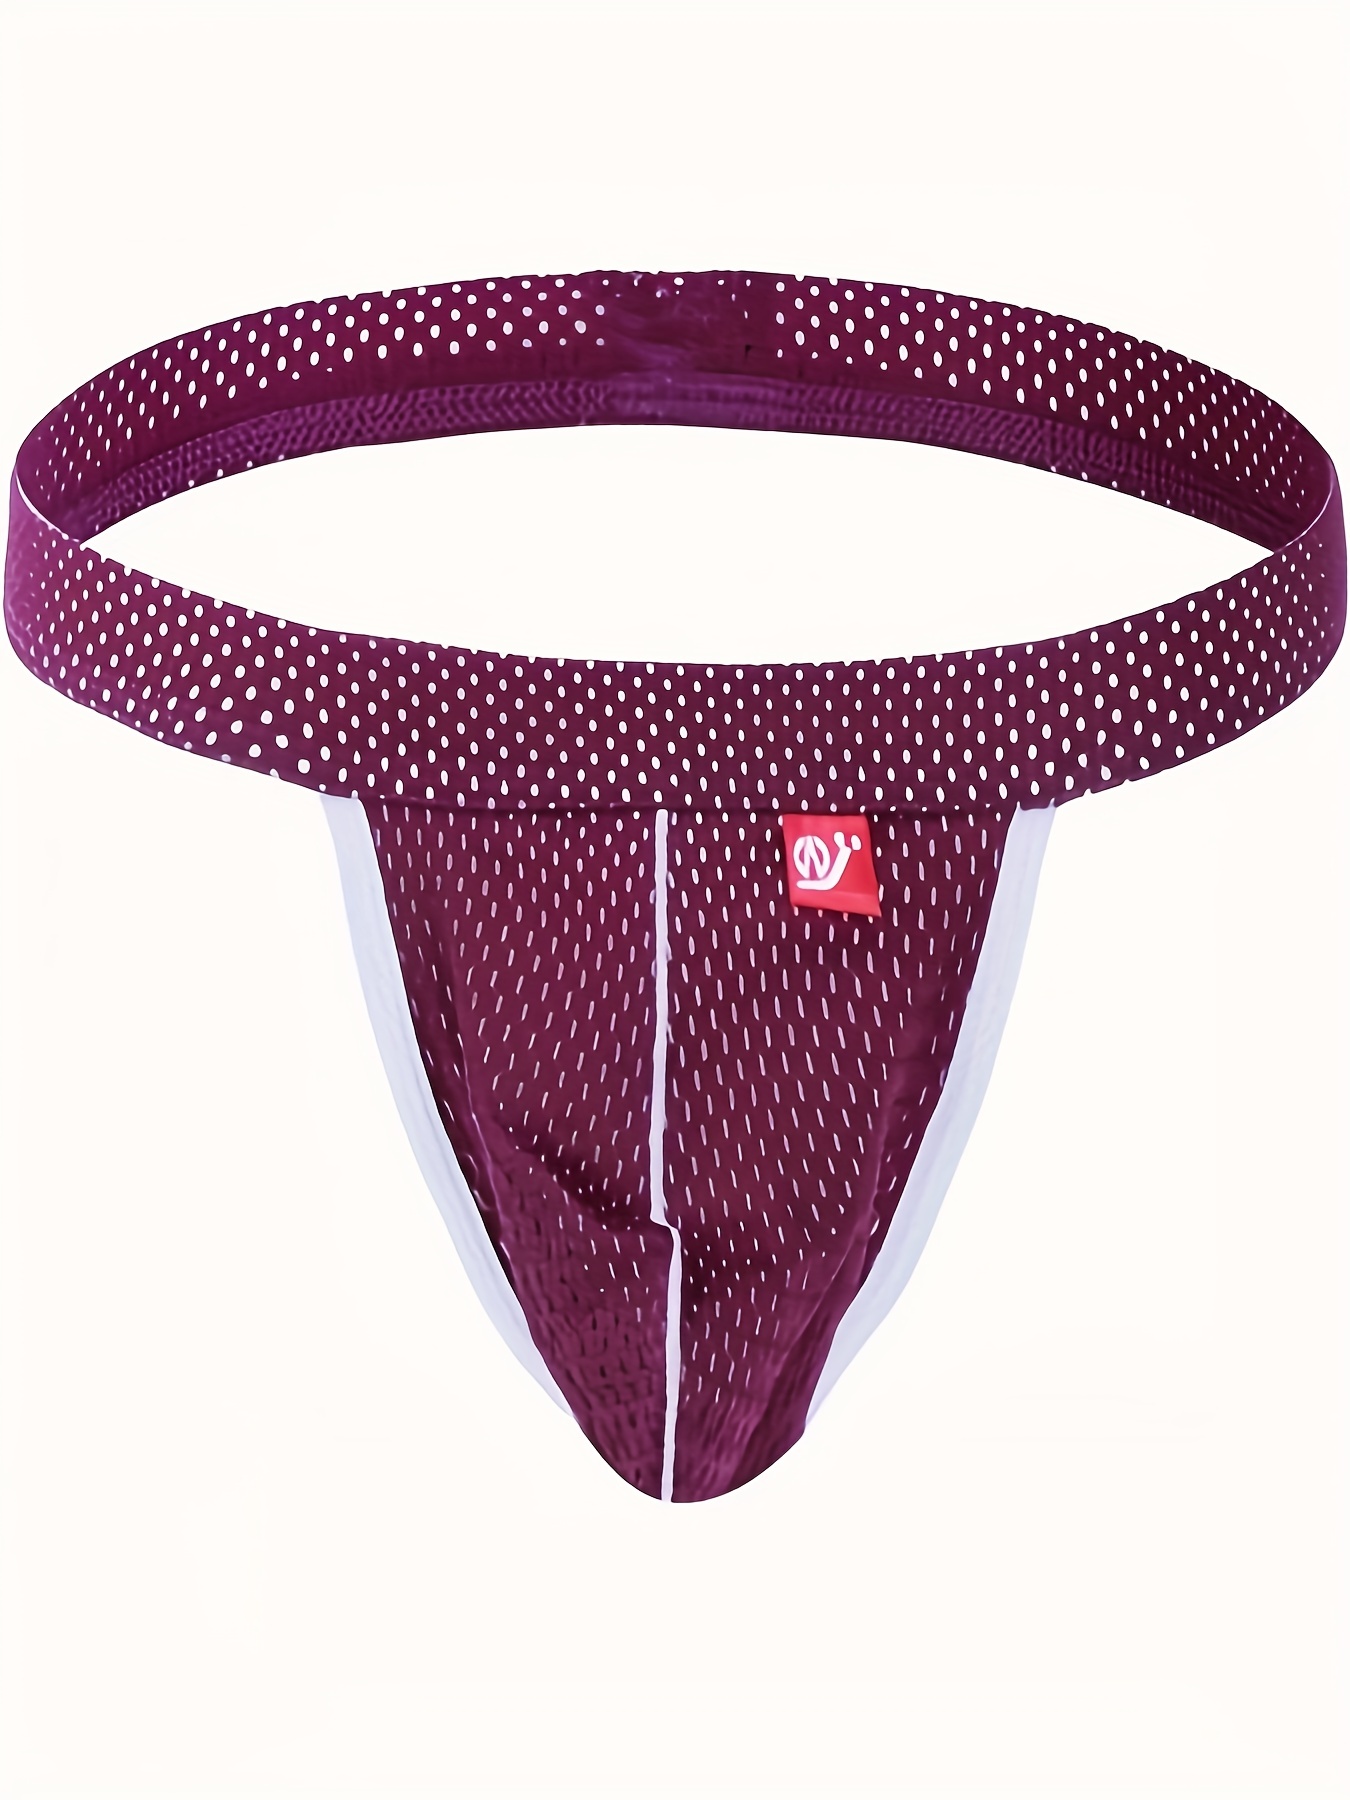 Mens C-String Underwear See Through Sheer Mesh Lingerie Bulge